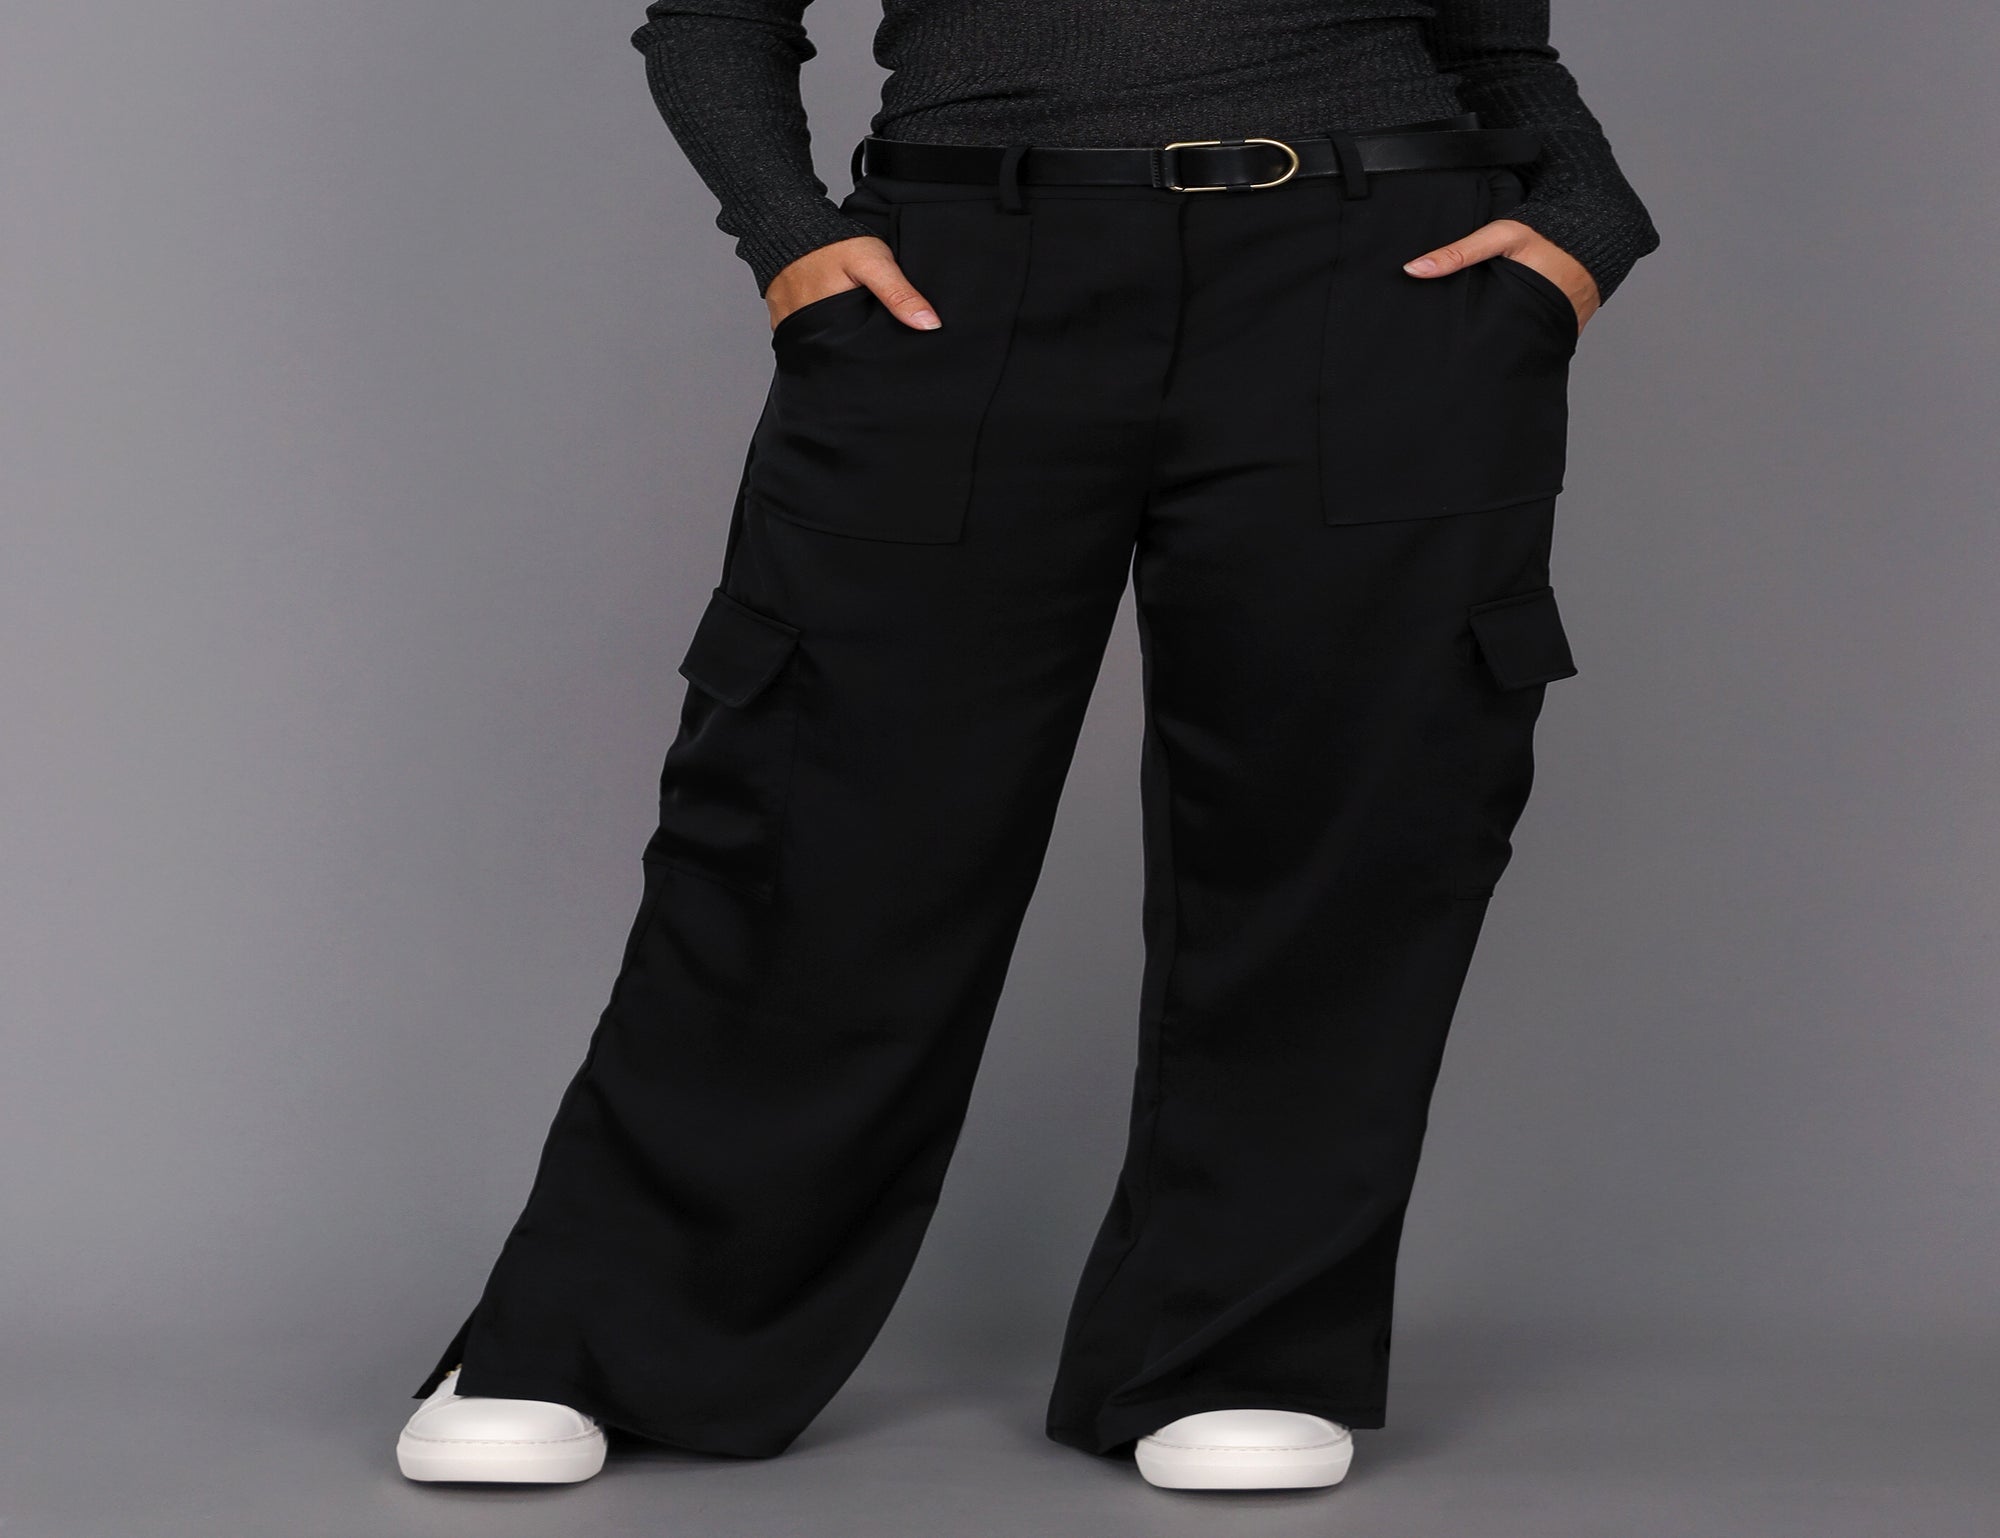 Wide Leg Cargo Pant - Black - Pants - Full Length - Women's Clothing - Storm